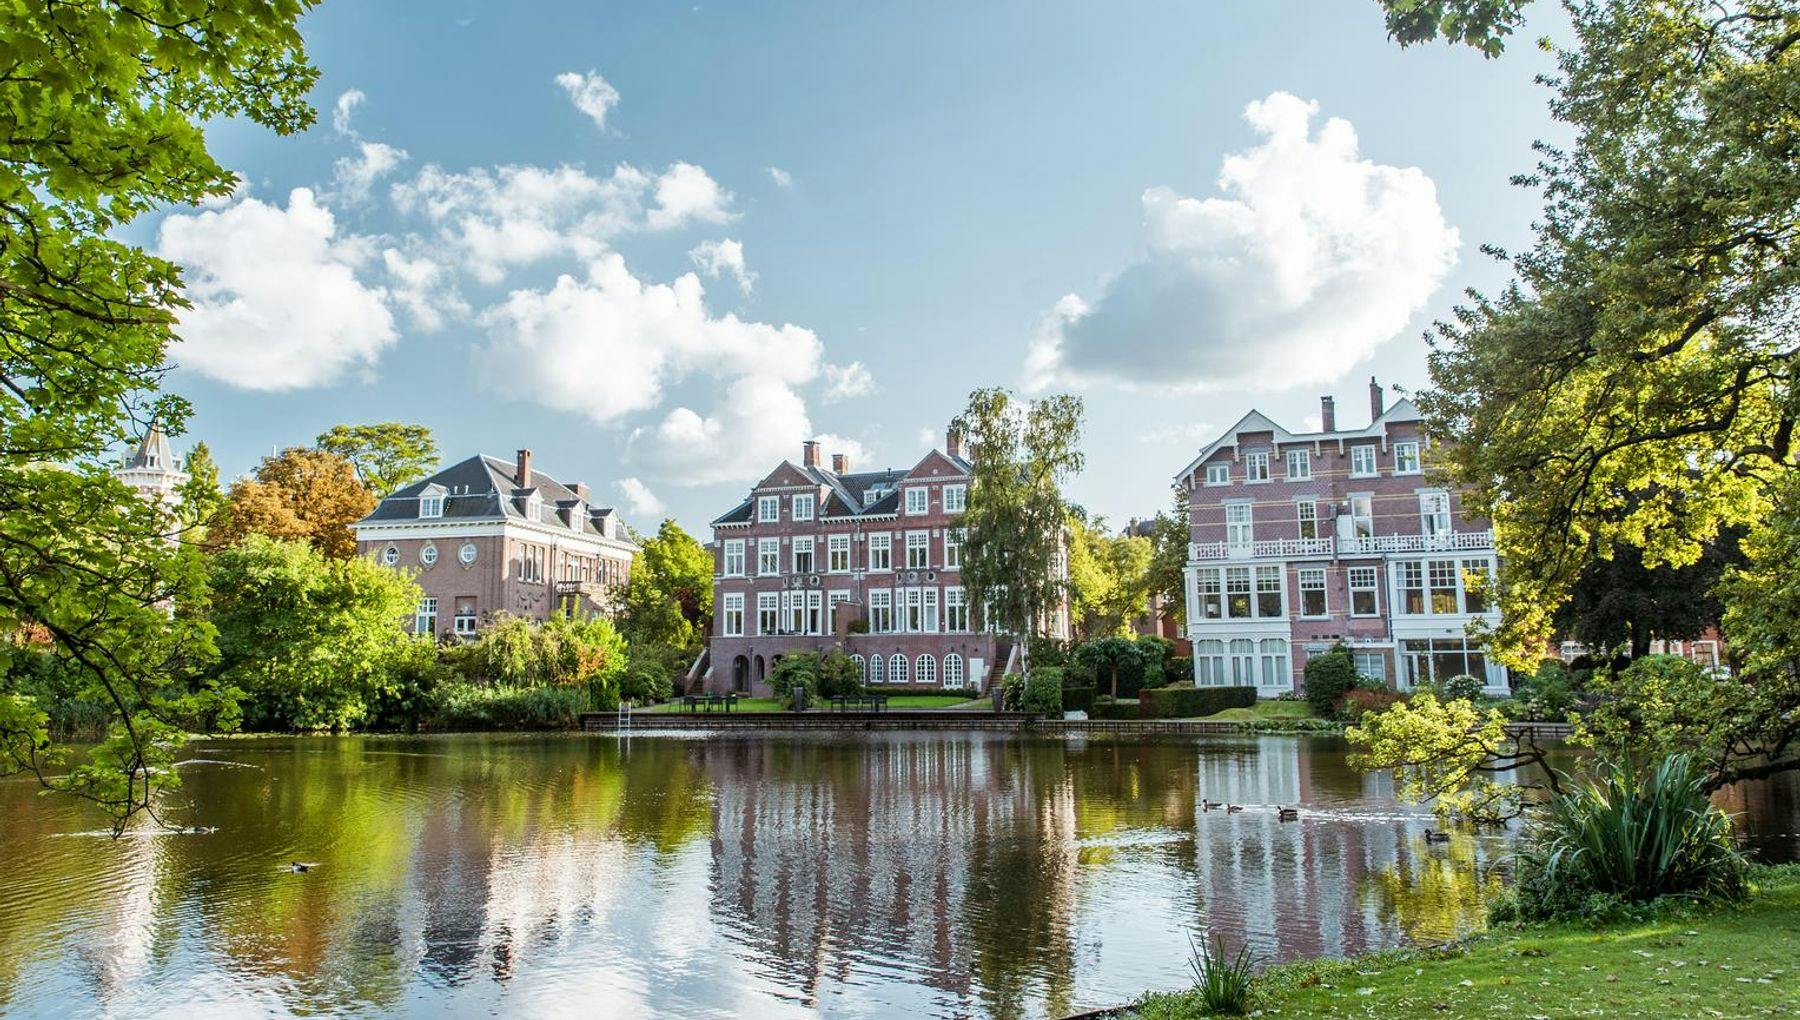 Villa mansions at Vondelpark